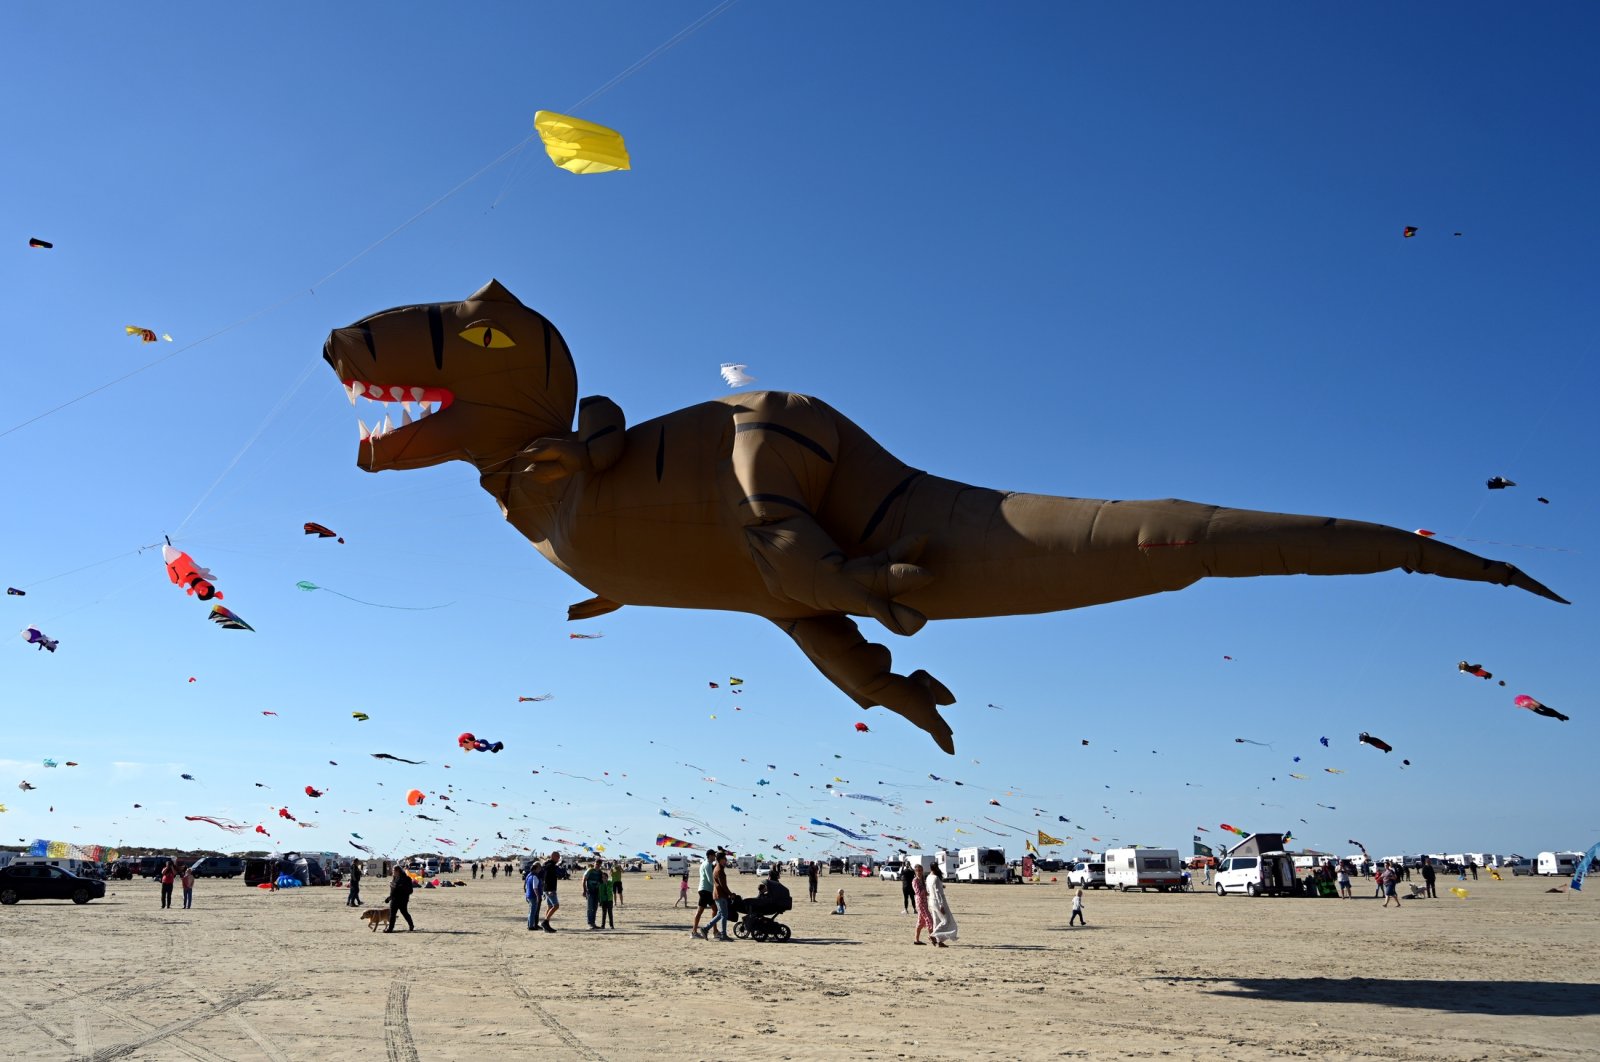 Creative kites dance in wind at Denmark's Romo festival | Daily Sabah